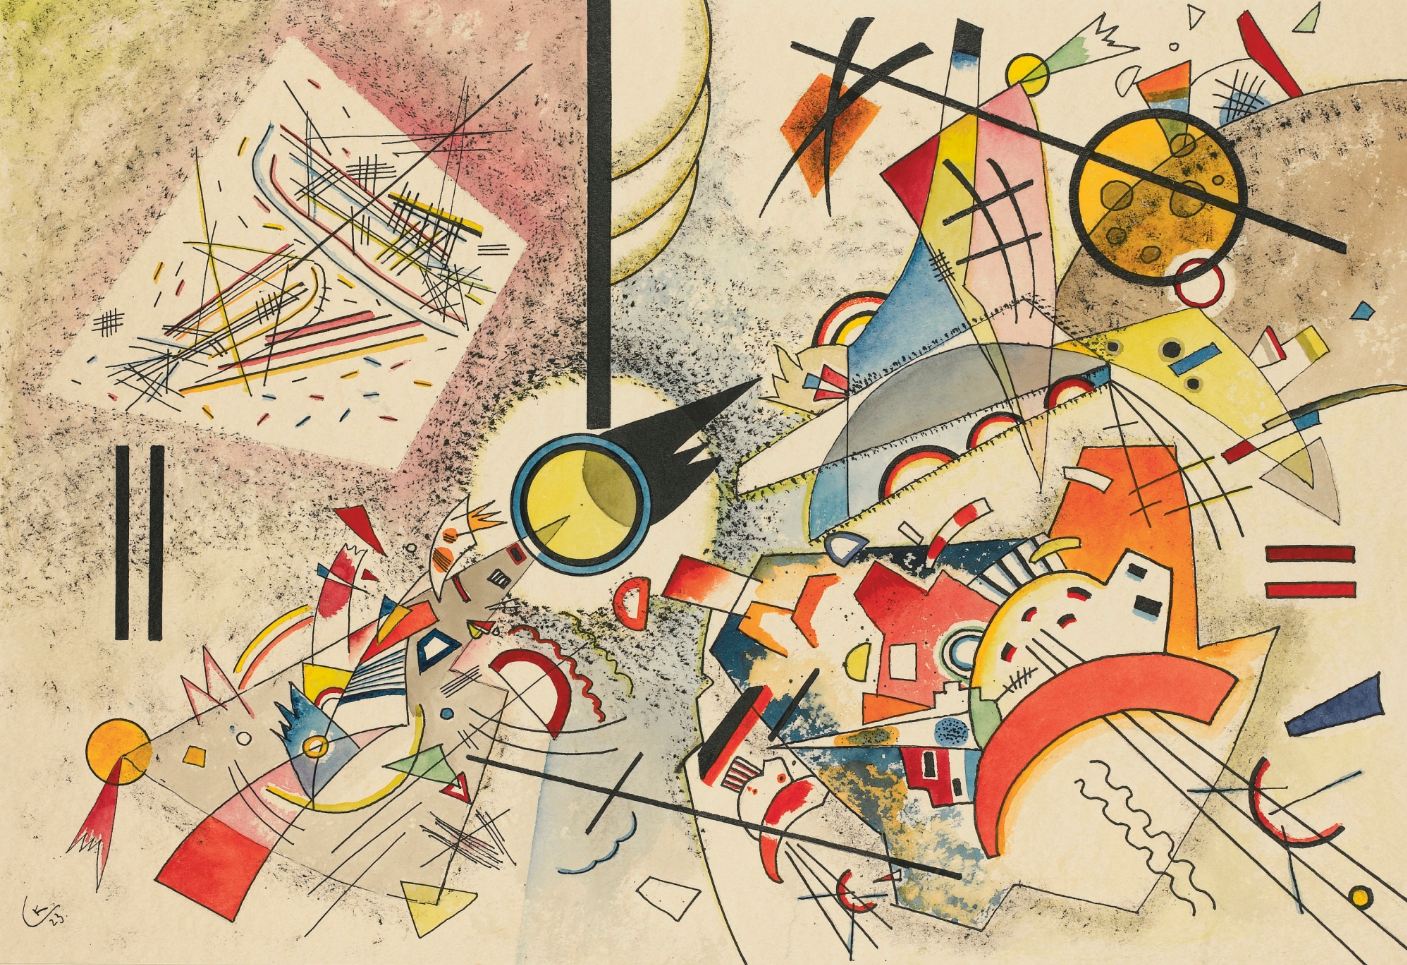 Wassily+Kandinsky-1866-1944 (405).jpg